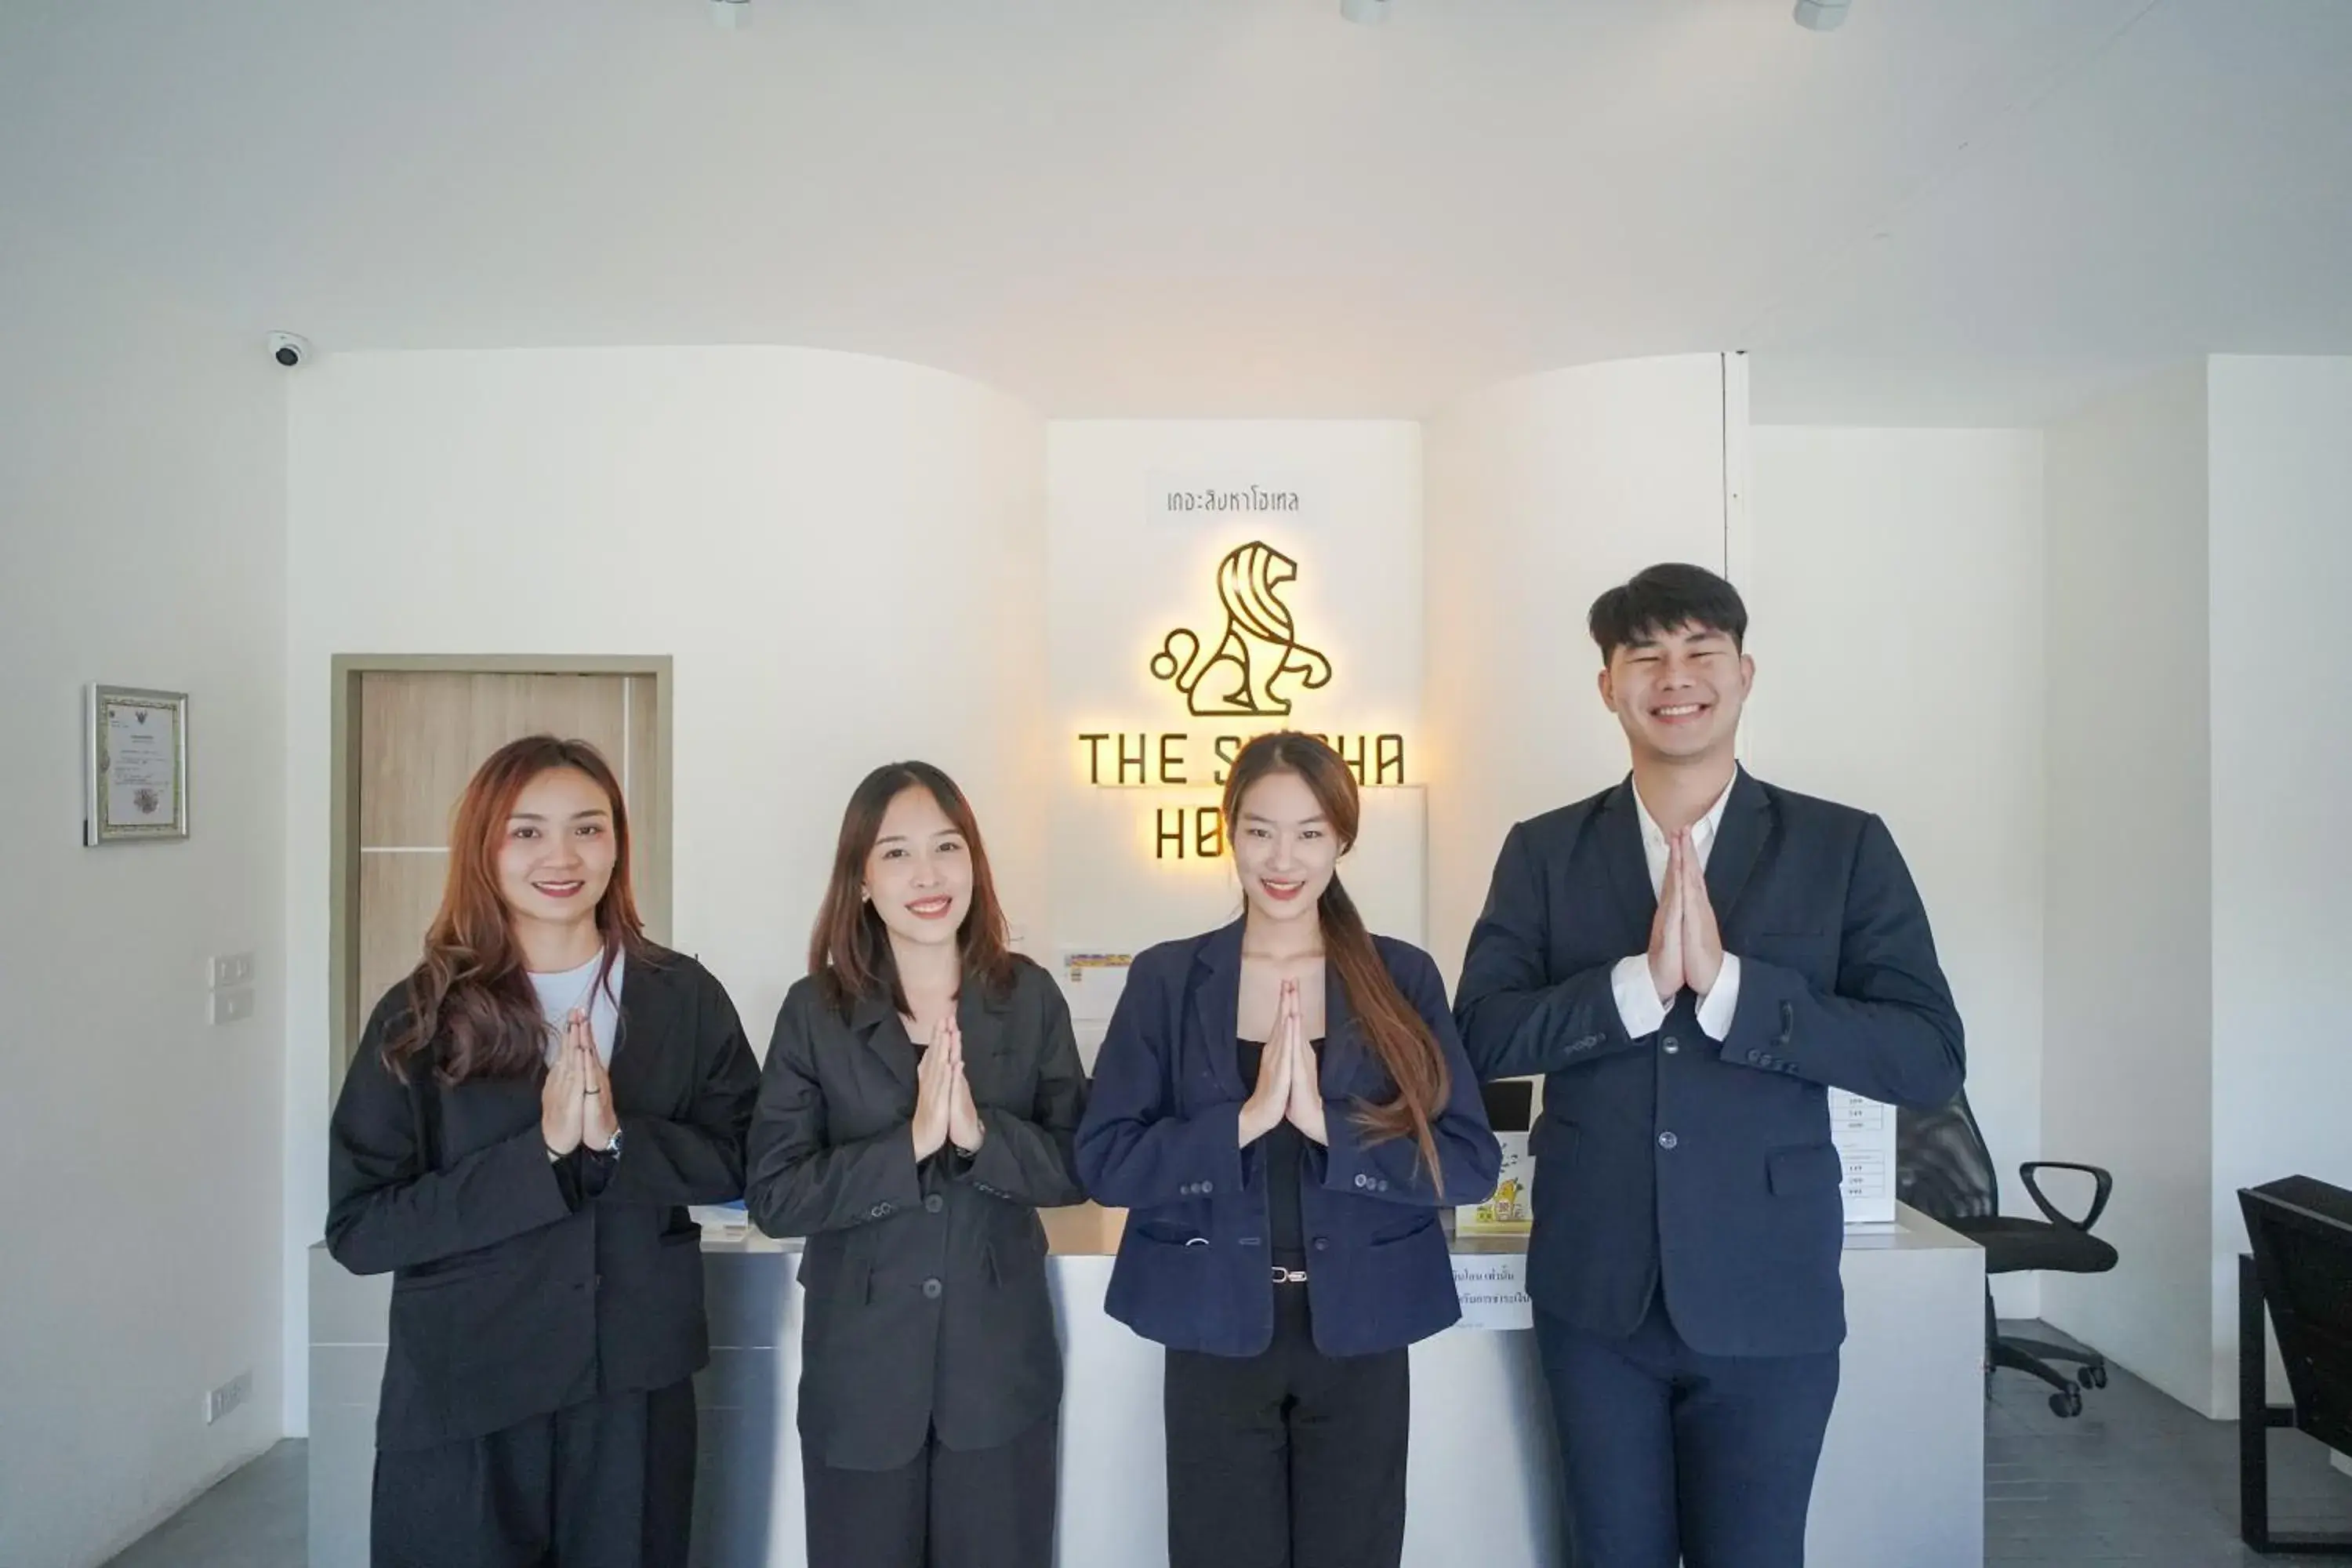 Staff in The Singha Hotel-Chiang Mai (SHA Certified)